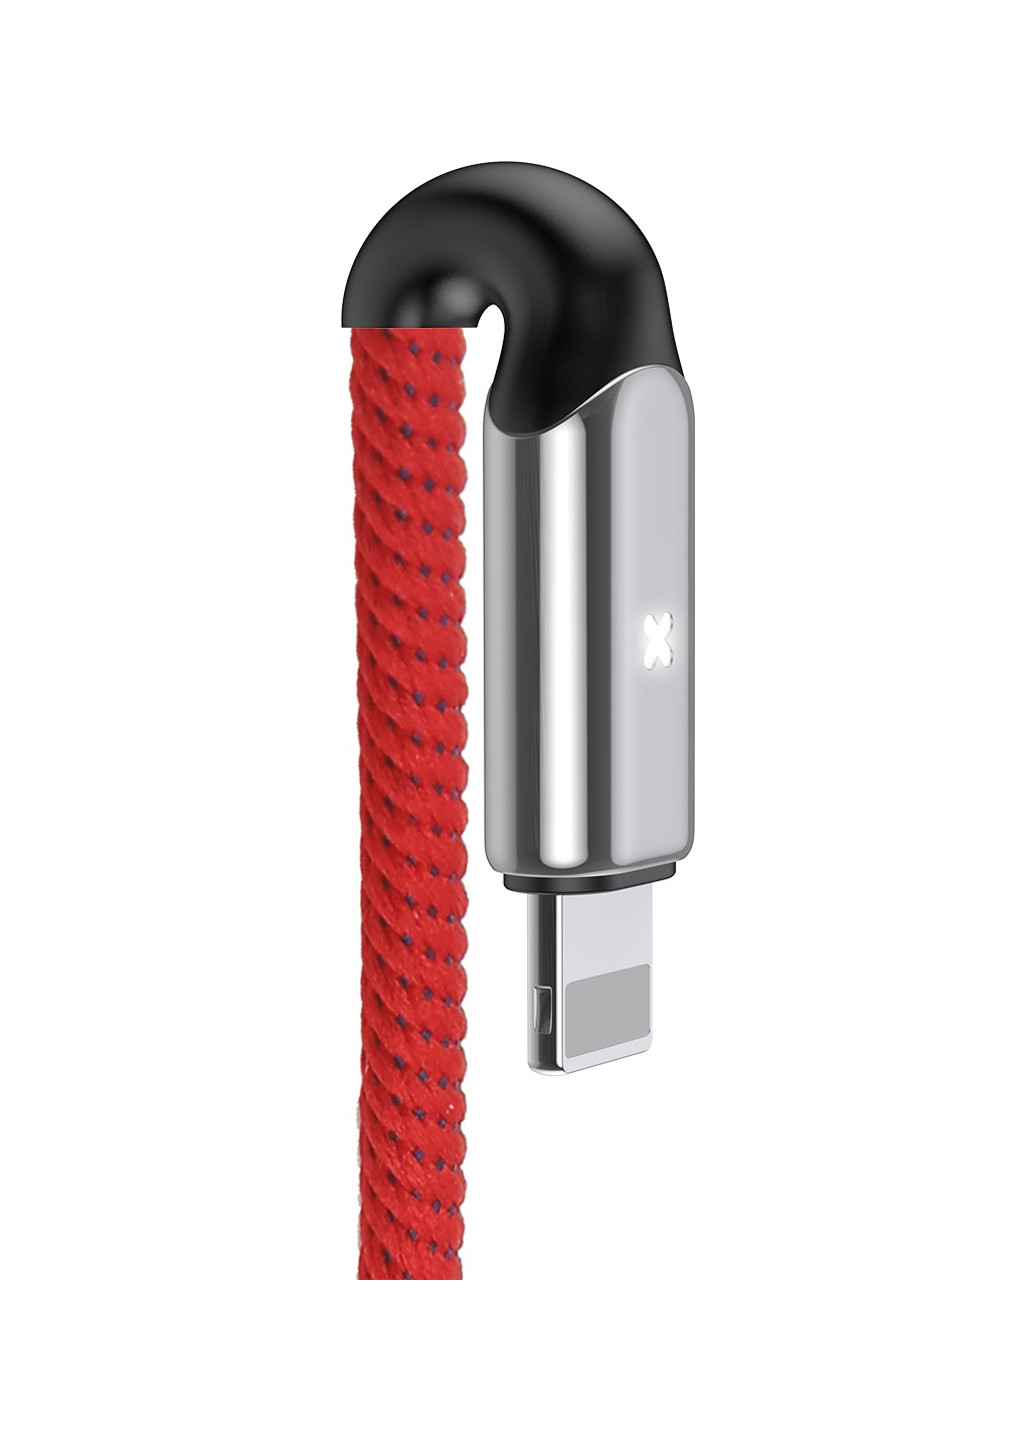 Кабель X-type Light Cable for Lightning 2.4A 0.5M Red (CALXD-A09) Baseus x-type light cable lightning (135000233)